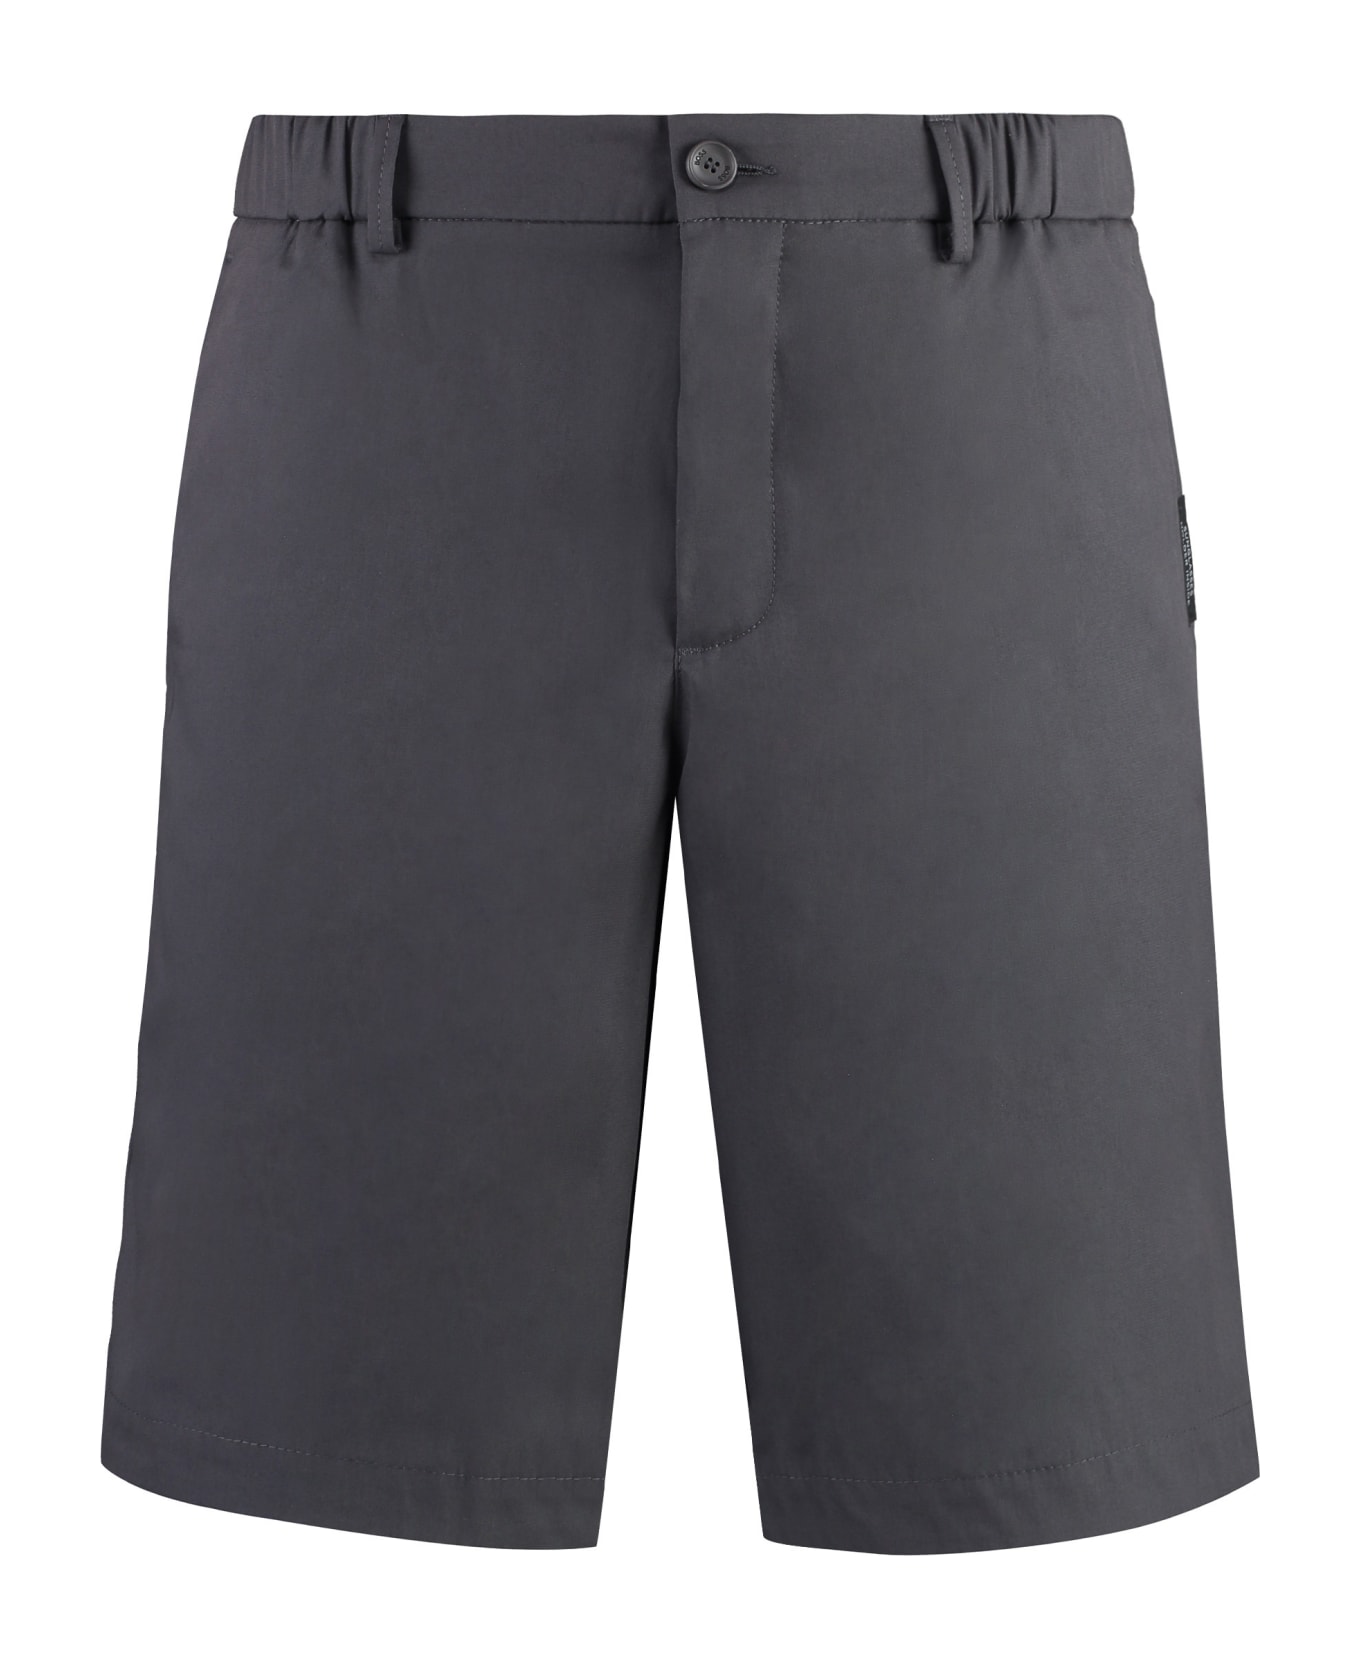 Hugo Boss Cotton Bermuda Shorts - grey